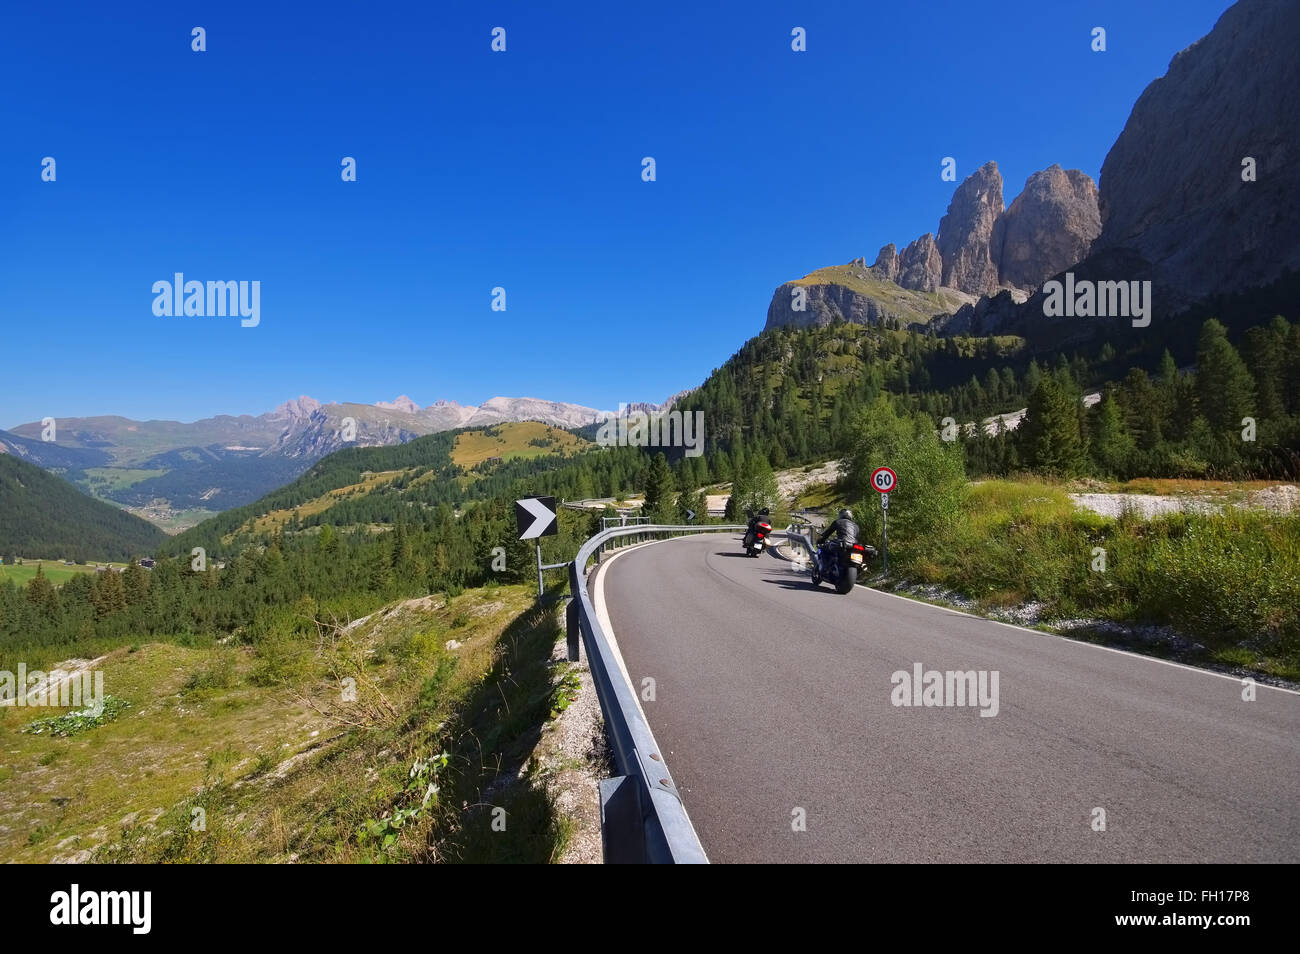 Sellajoch in den Dolomiten, von Alpen - Sella pass en Dolomites, Alpes italiennes Banque D'Images